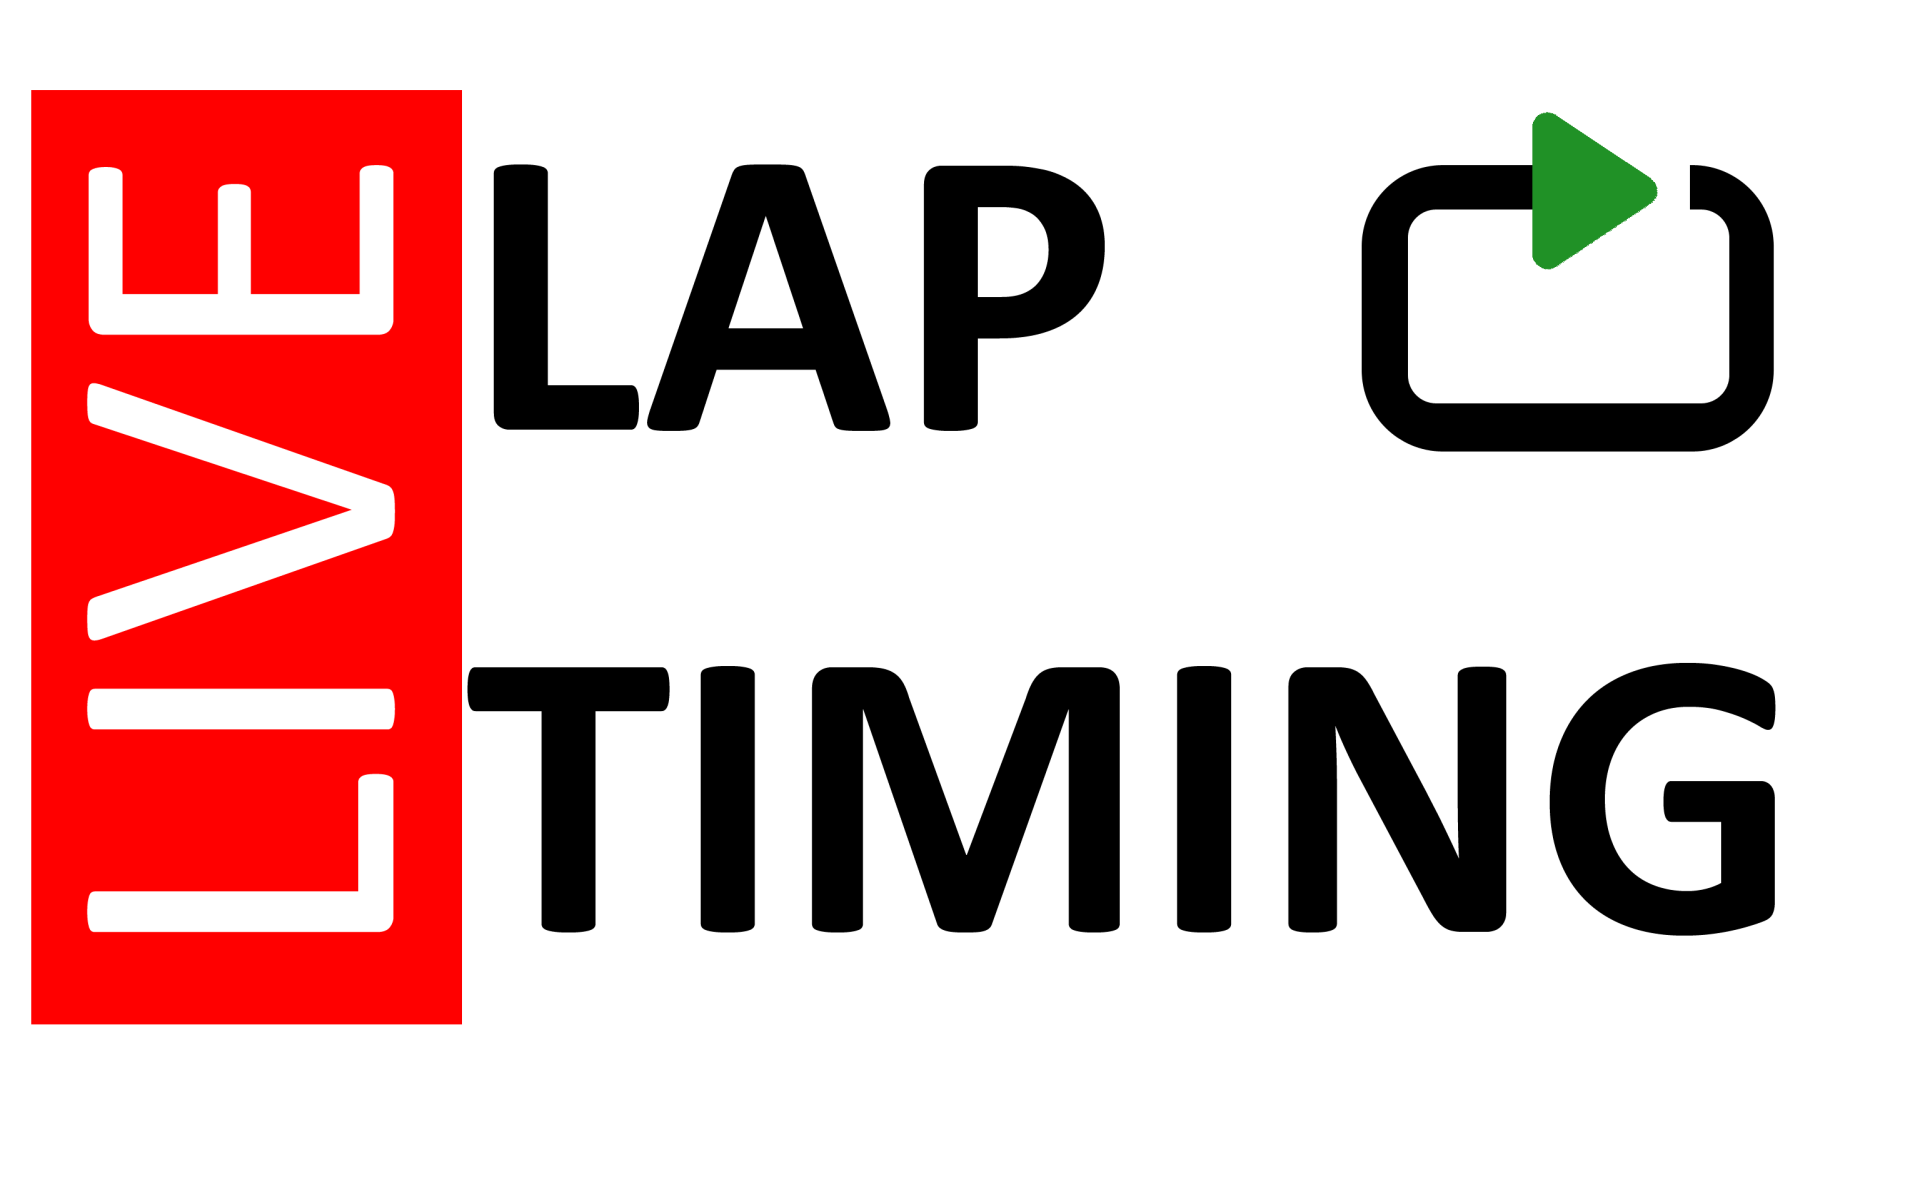 live-lap-timing-for-karts-kart-lap-timing-app-lap-timing